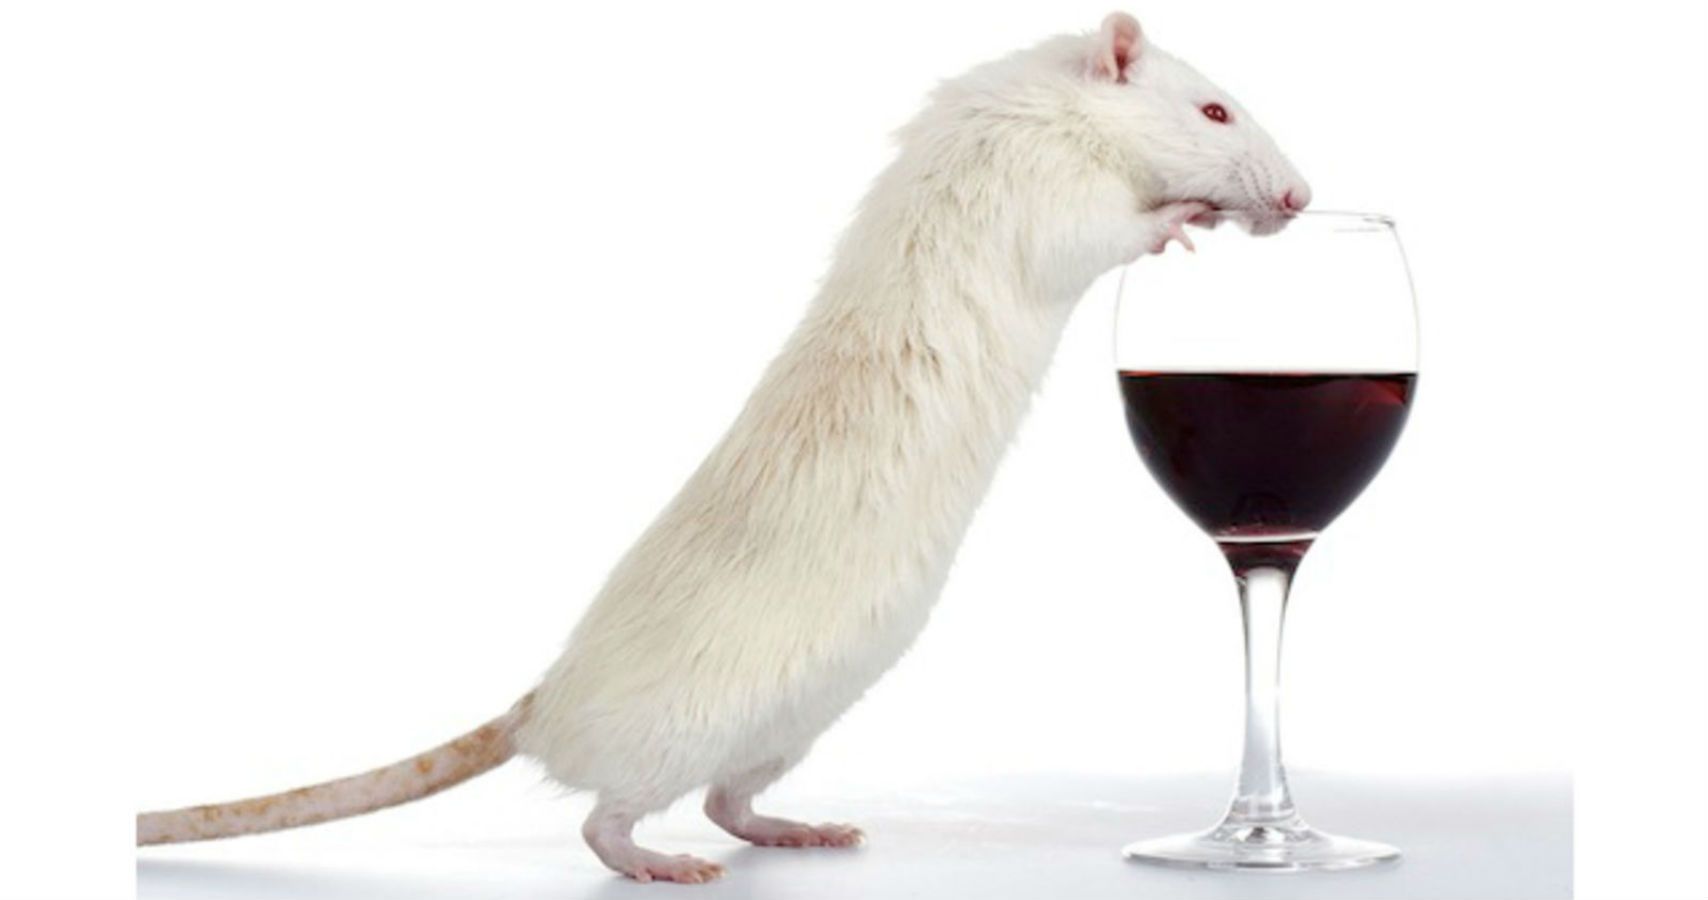 1672723059 725 Funcionarios do governo indiano culpam ratos pela falta de alcool